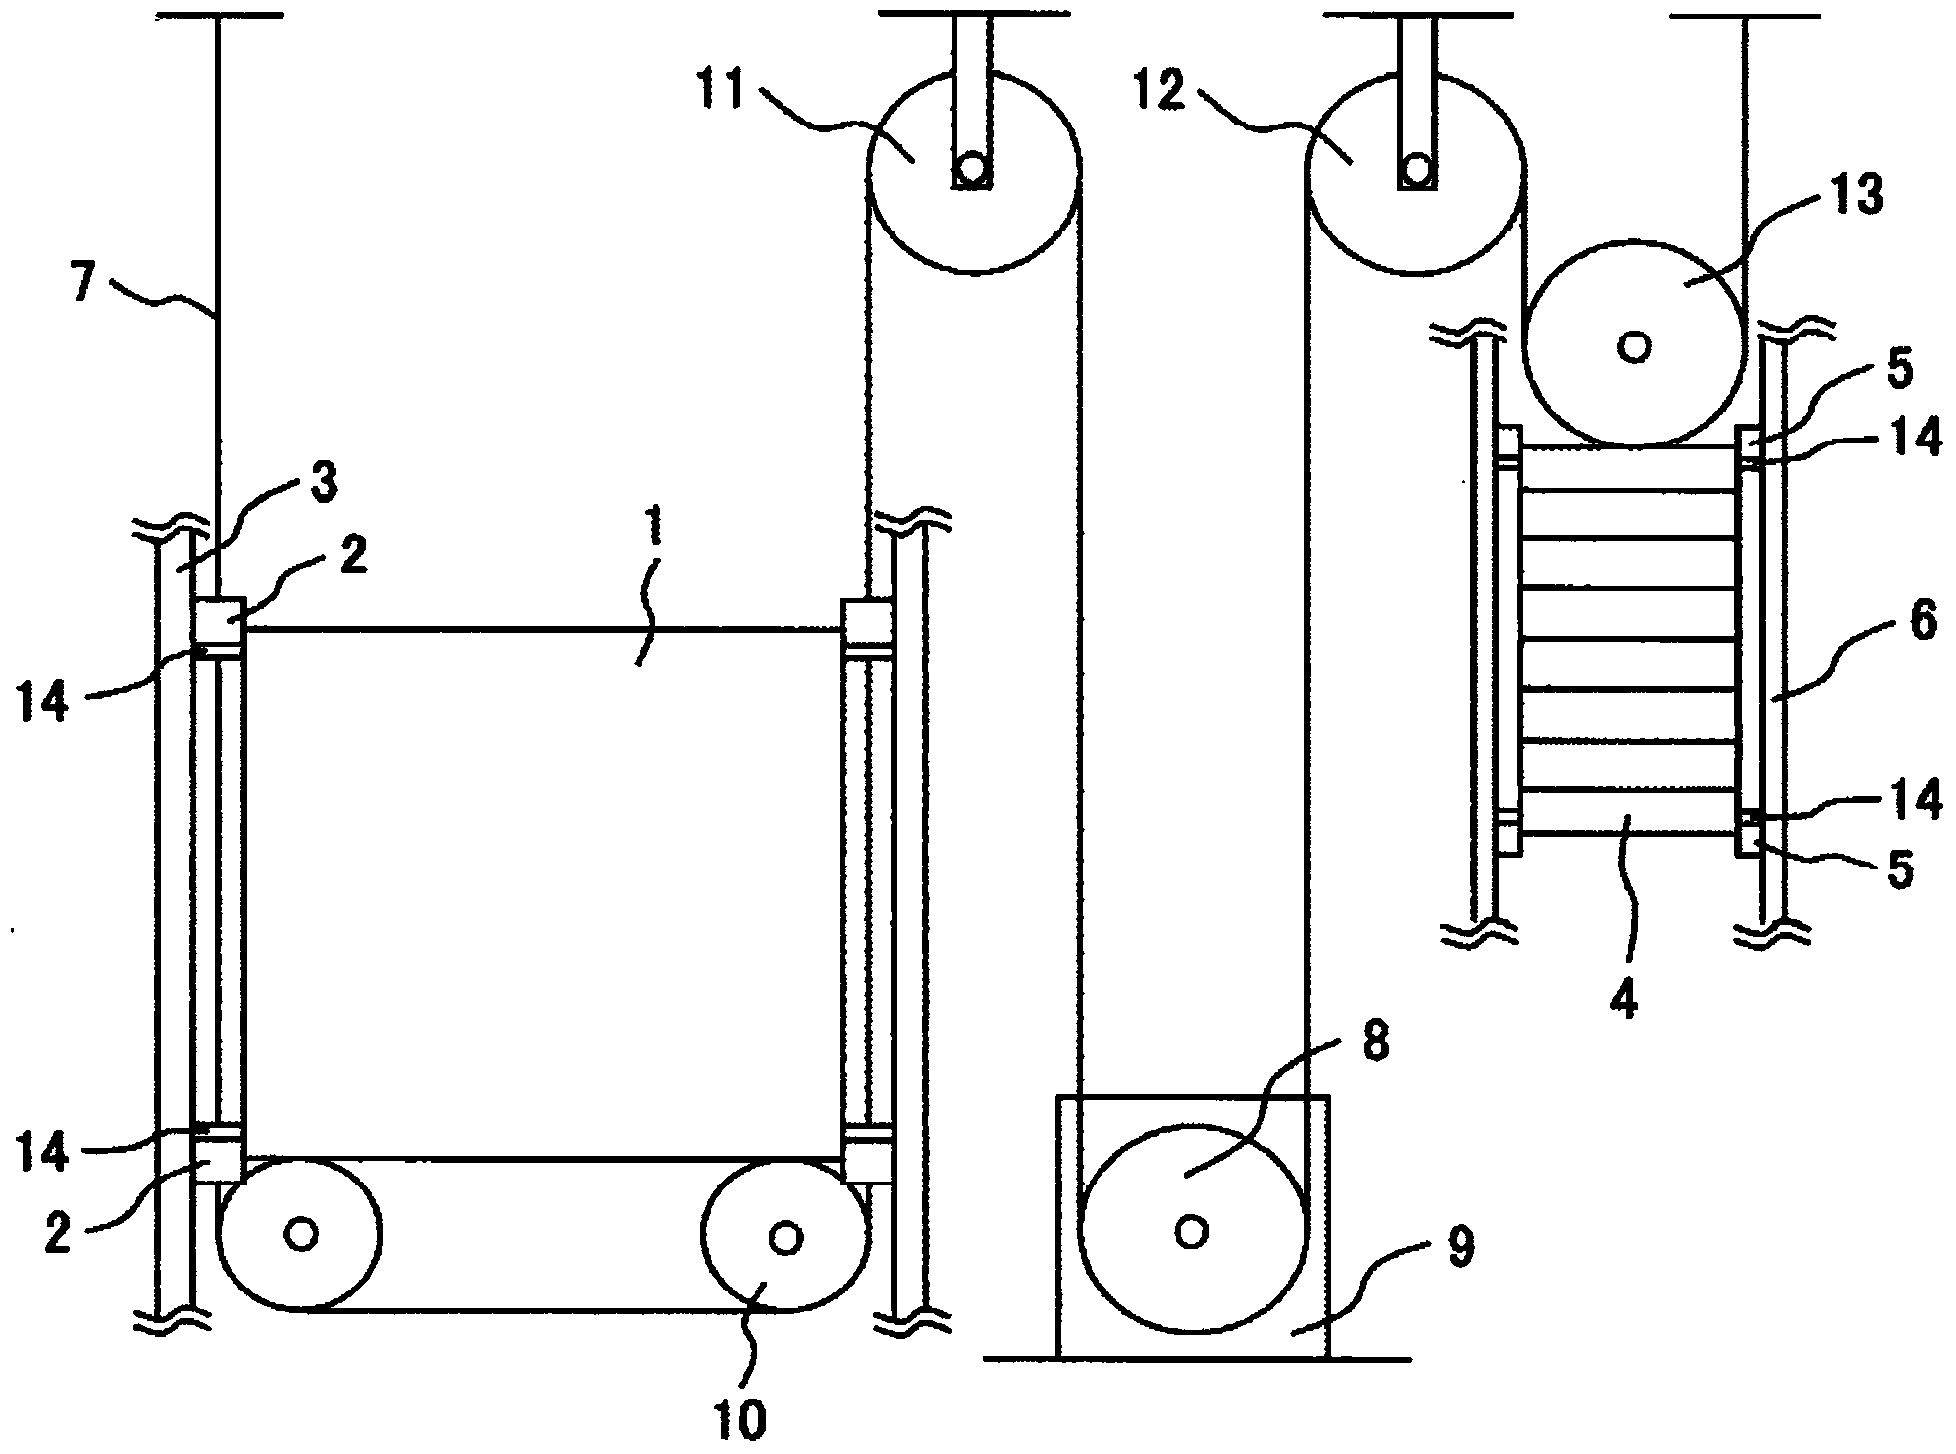 An elevator apparatus